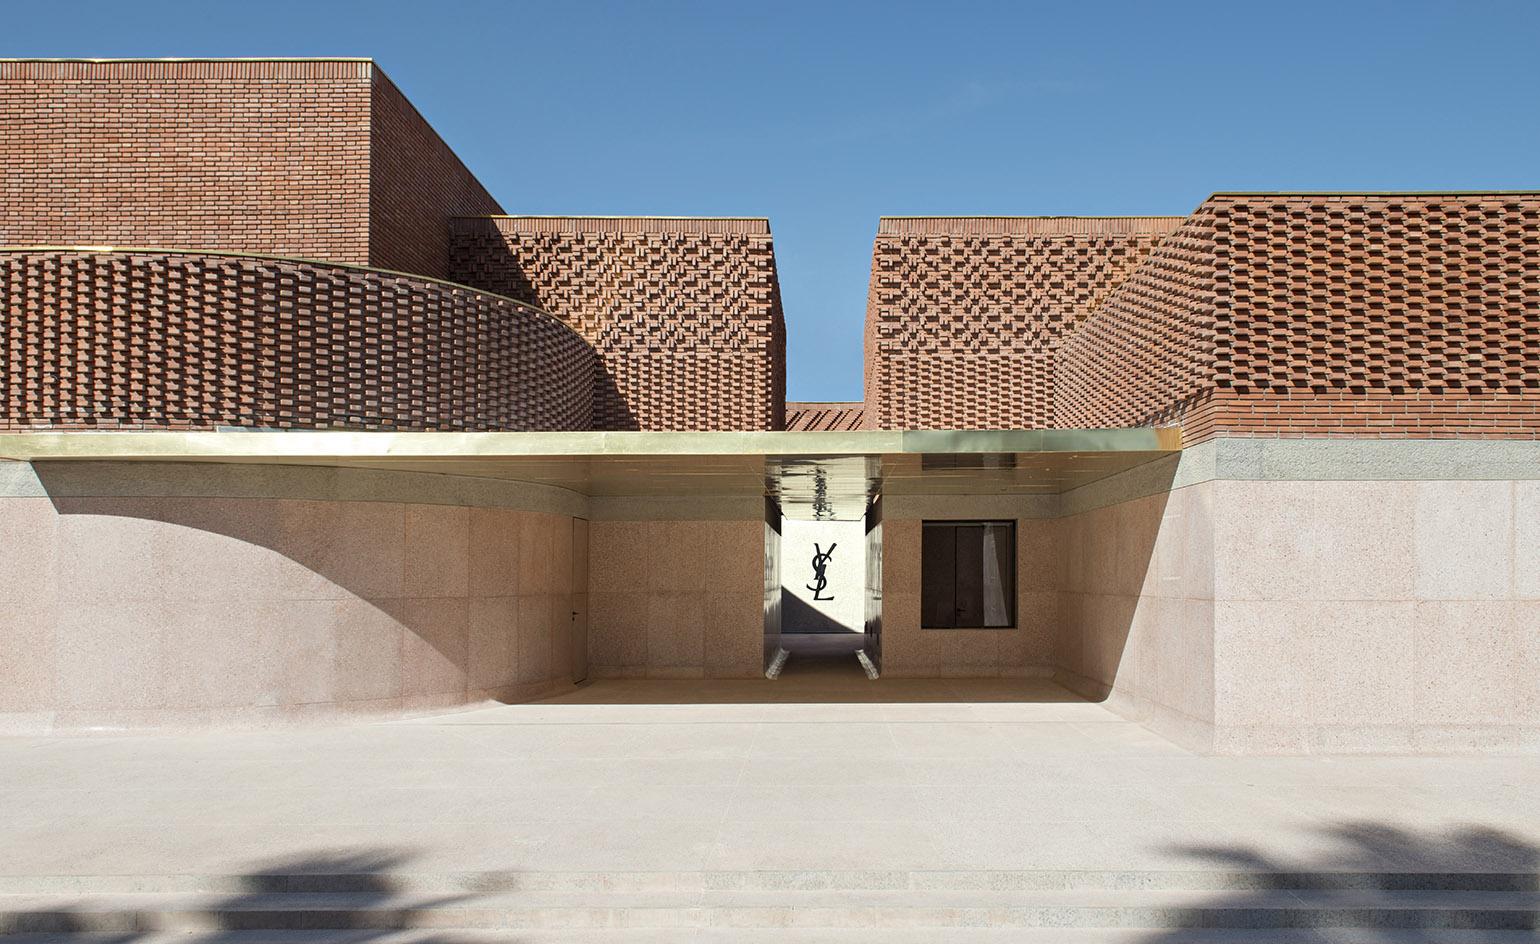 The Yves Saint Laurent museum opens in Marrakech. Wallpaper*